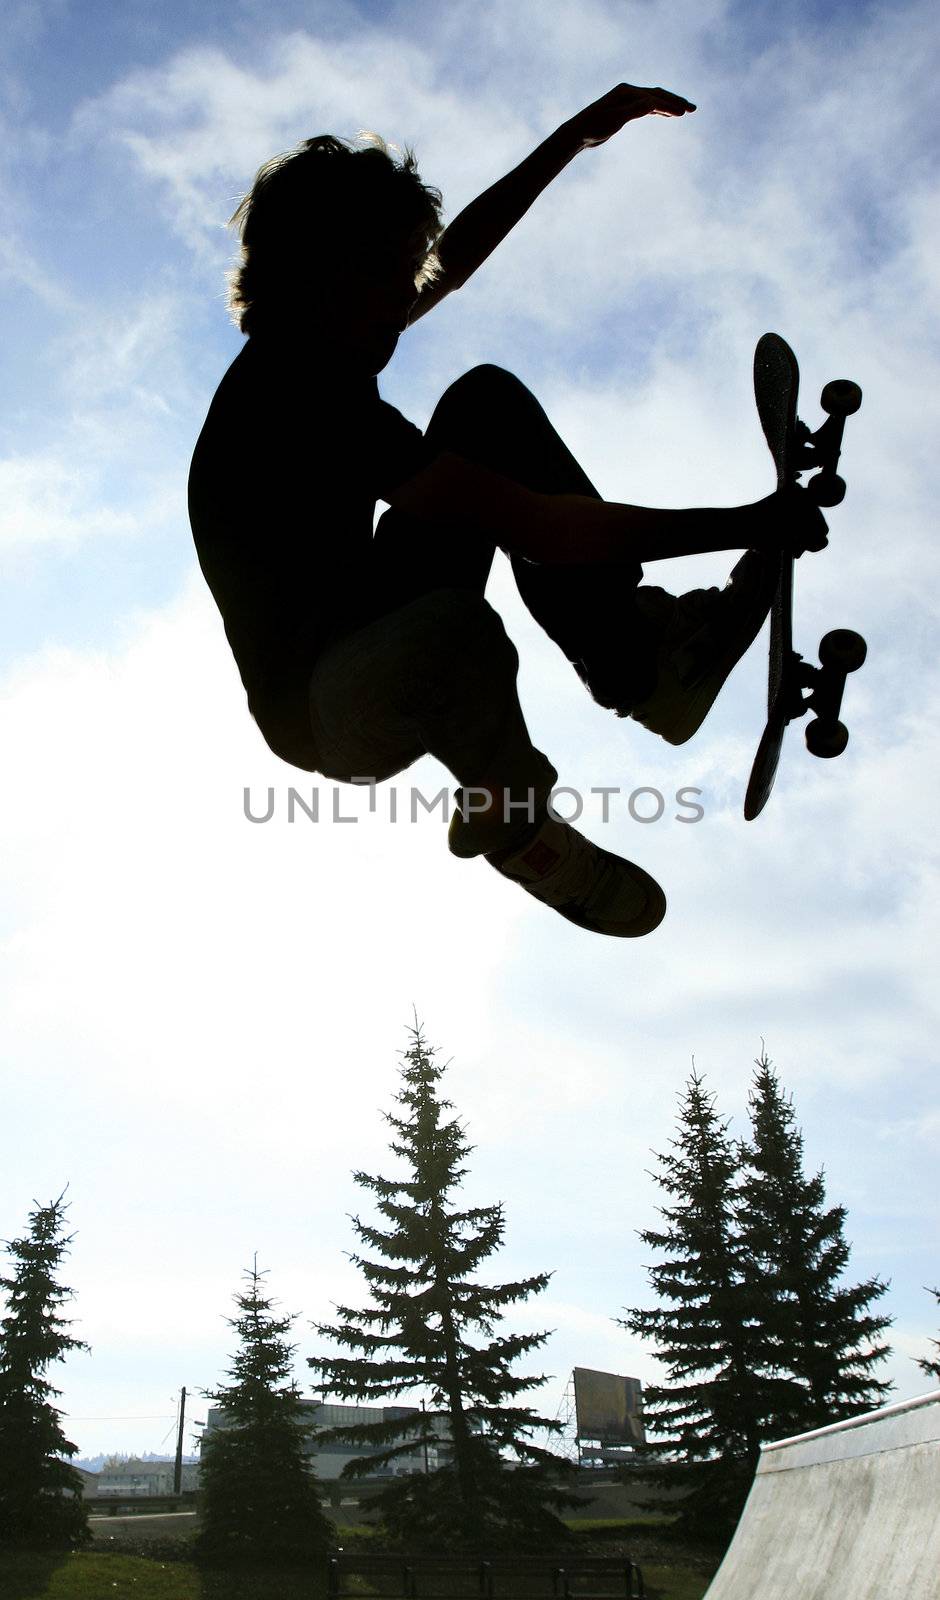 Skate Board Silhouette by mattvanderlinde